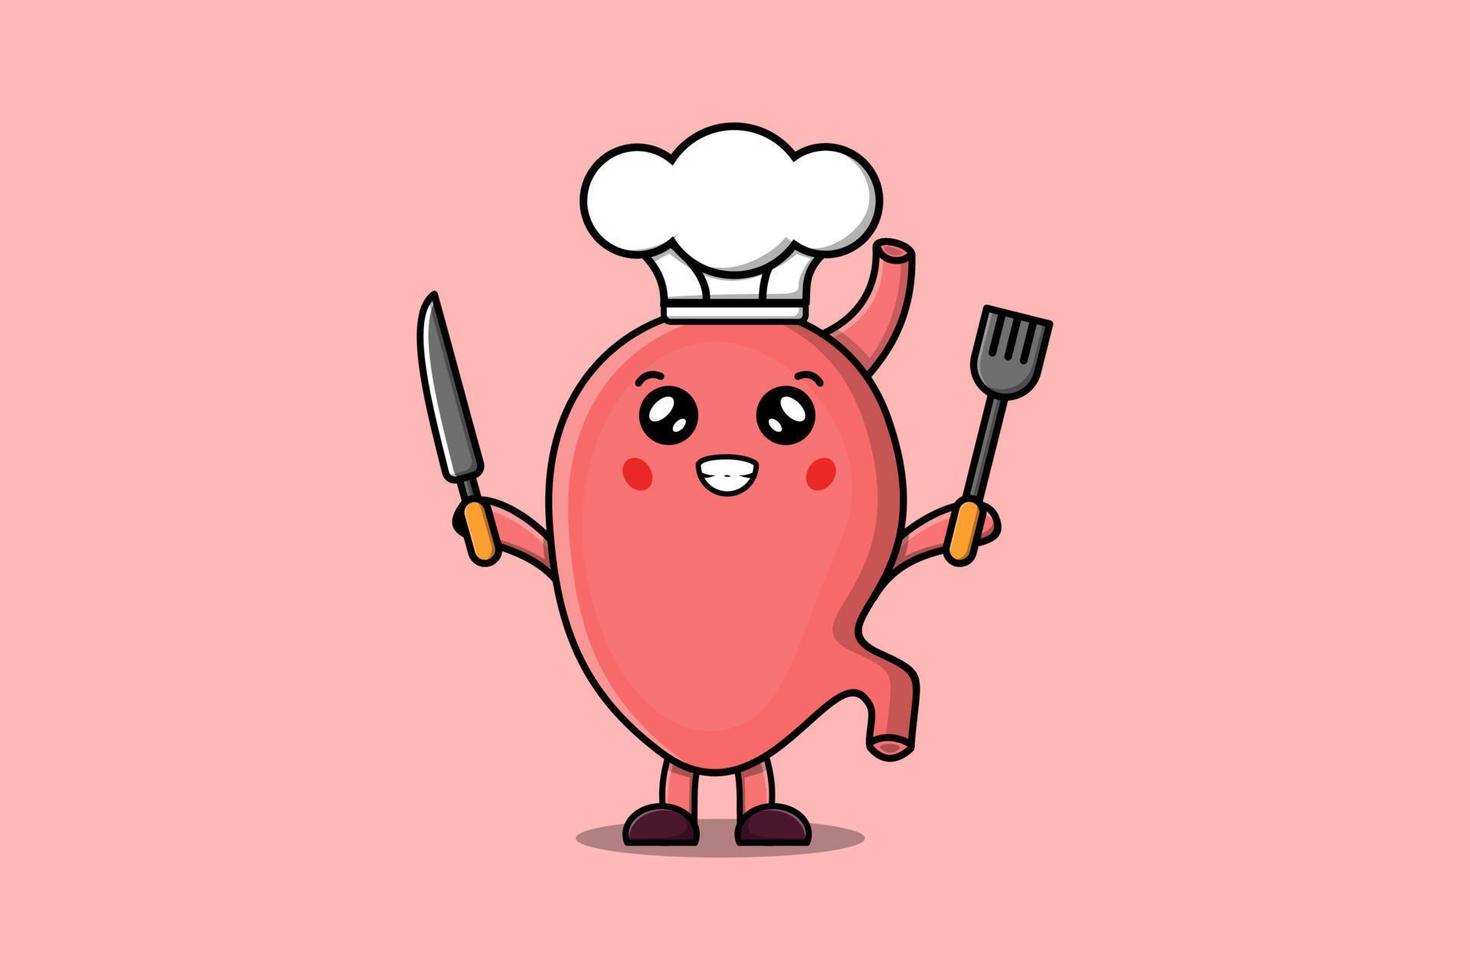 schattig tekenfilm maag chef Holding mes en vork vector